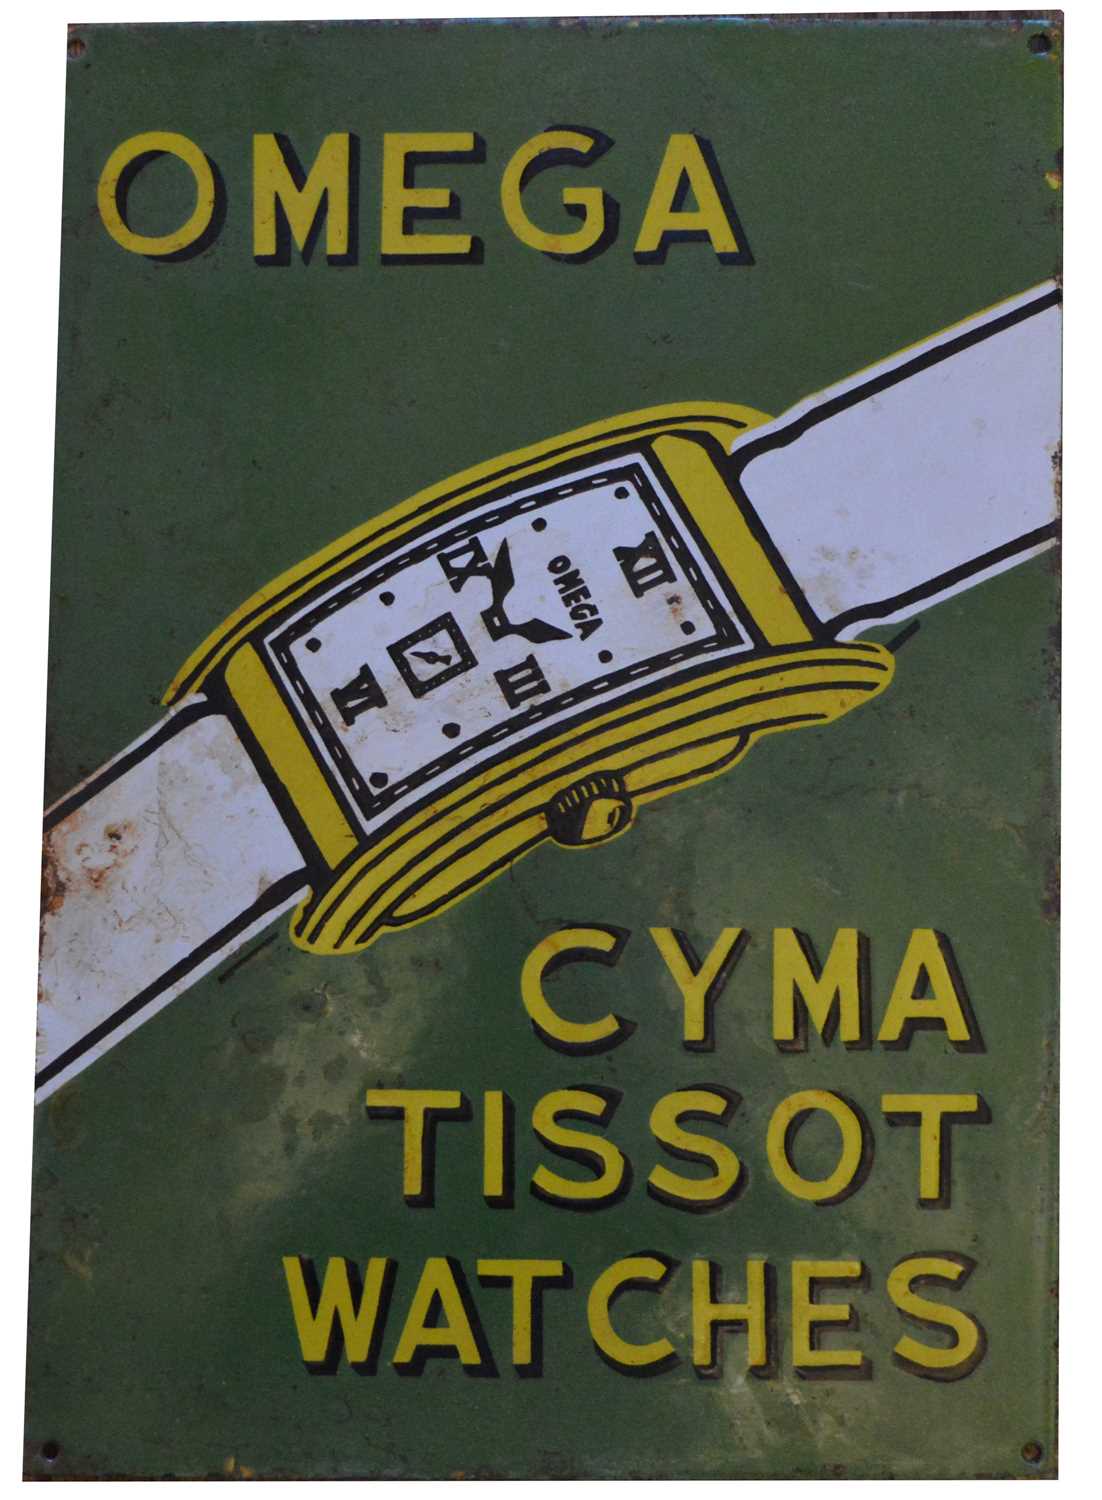 Lot 728 - Omega enamel advertising sign